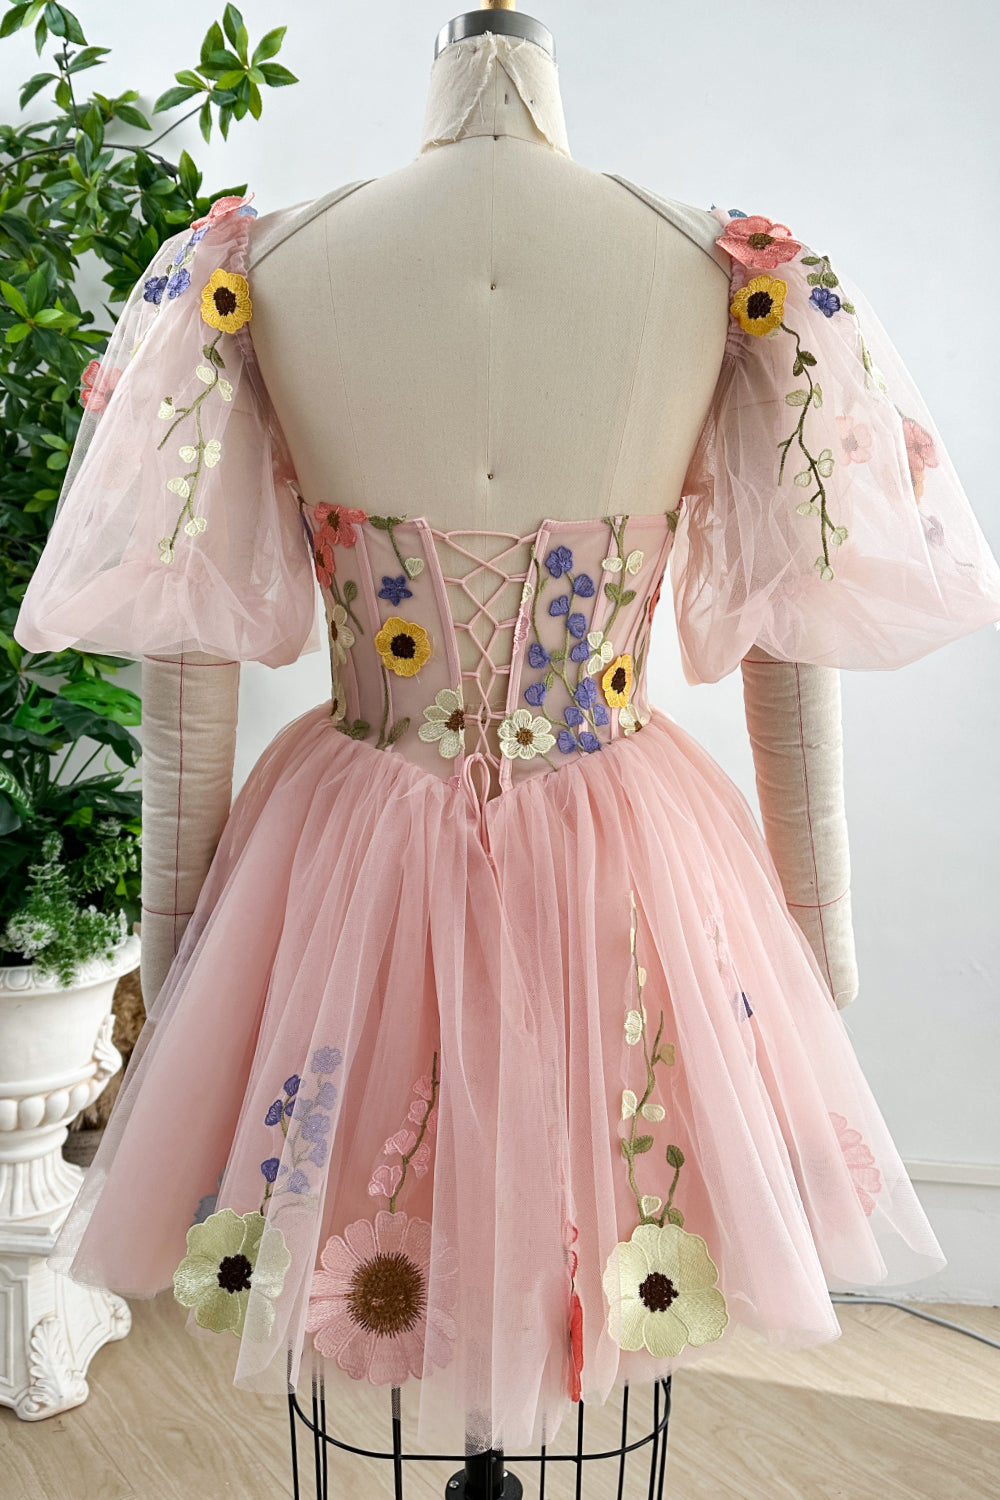 MissJophiel Strapless Corset Floral Applique Dress with Removable Puff Sleeves